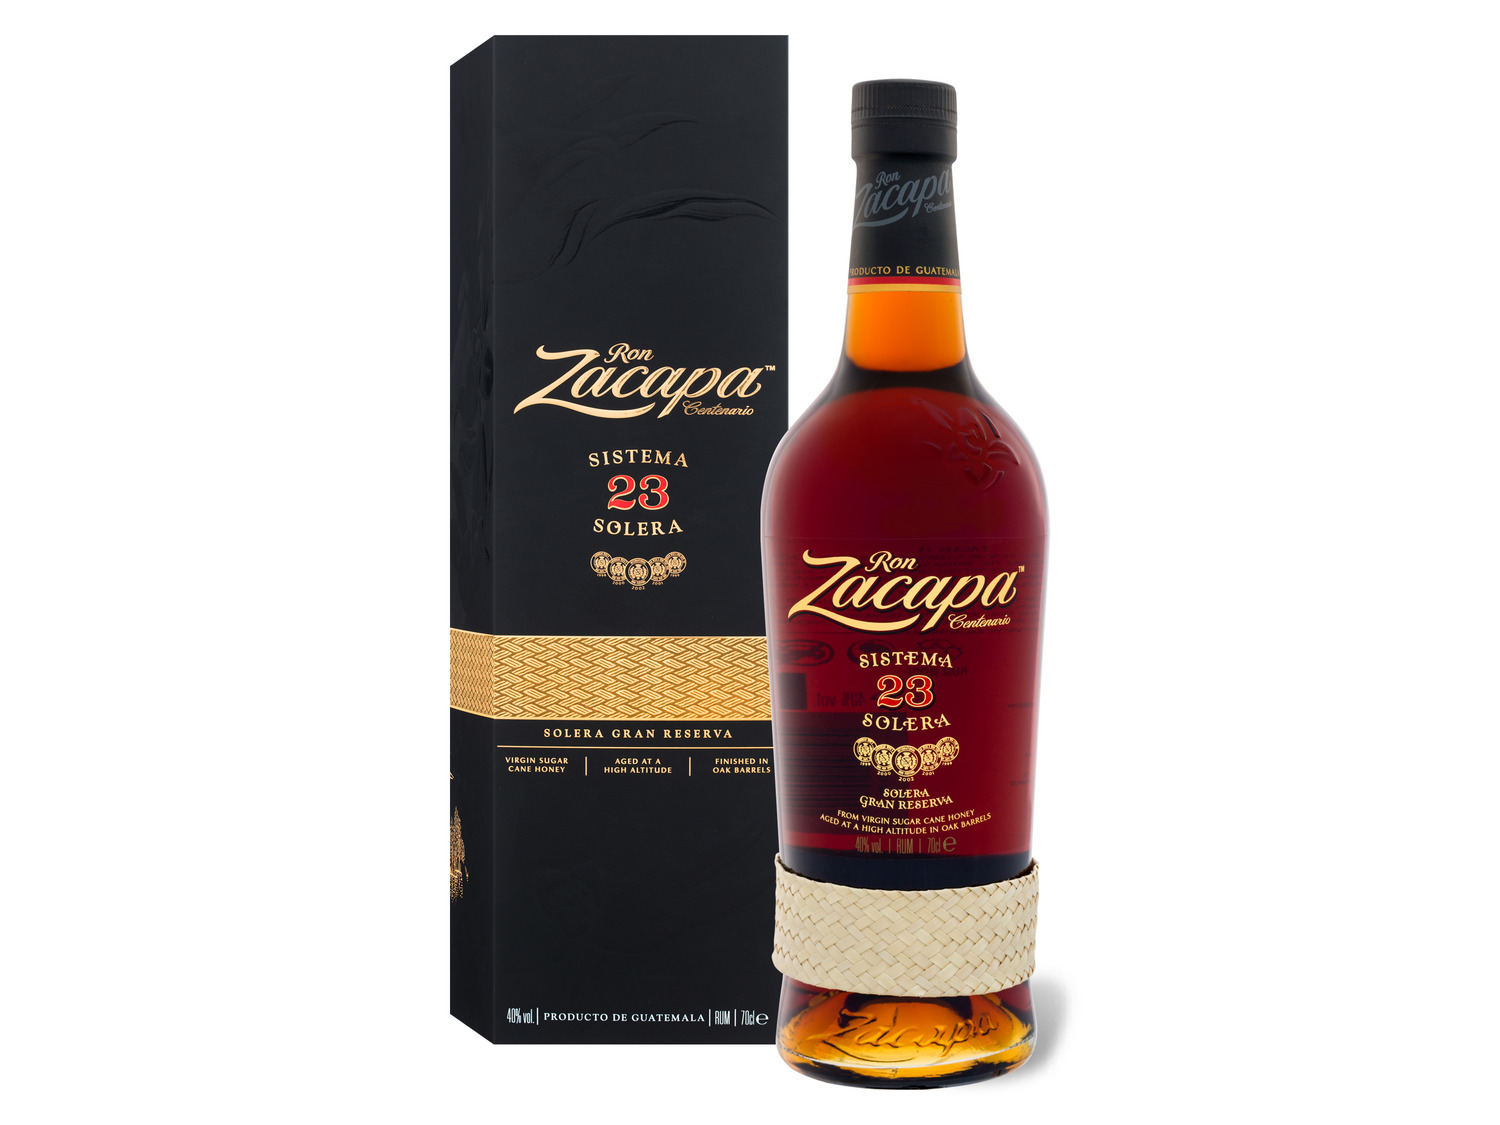 Gran Ron Geschenkbox Solera Rum … 23 mit Zacapa Reserva